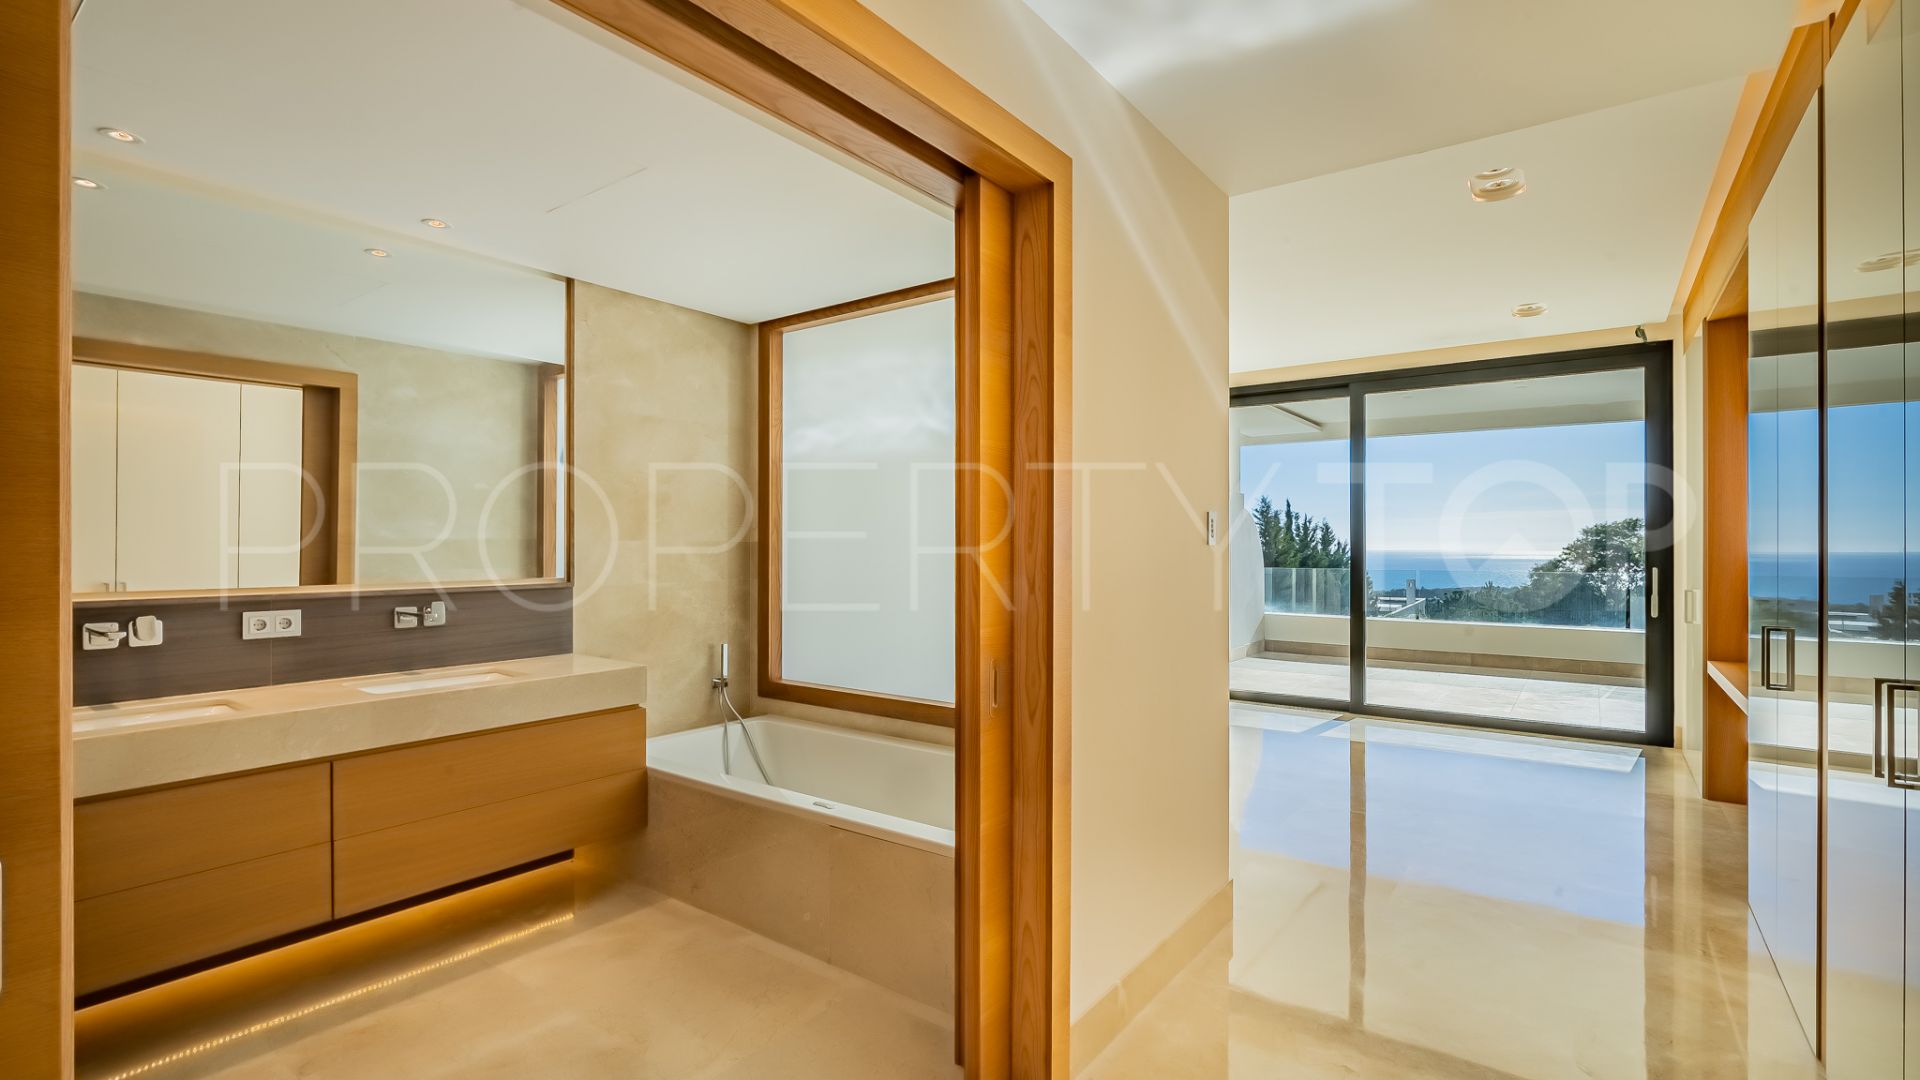 4 bedrooms Sierra Blanca duplex penthouse for sale